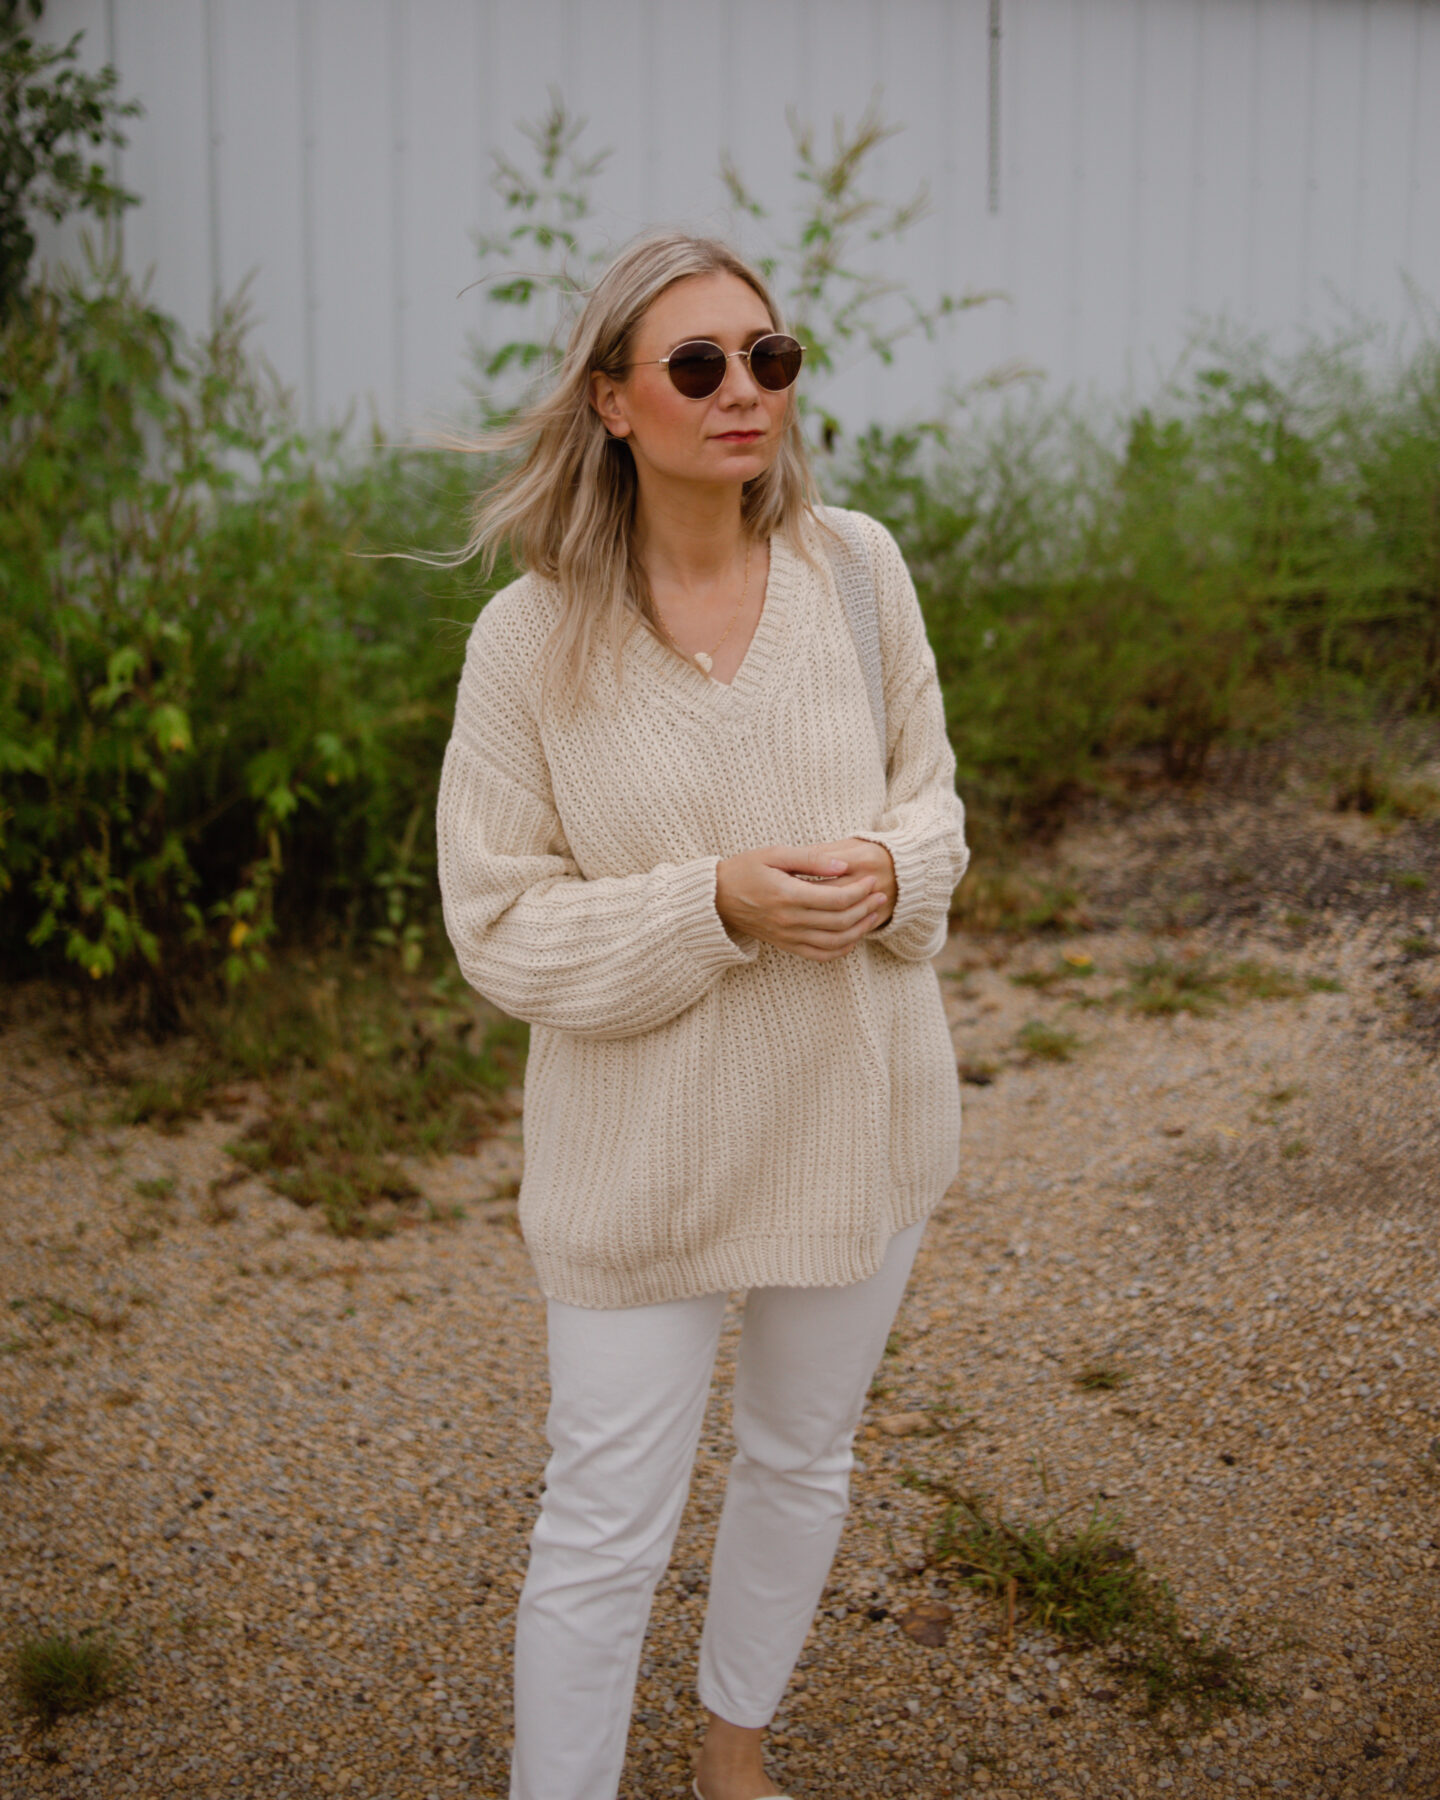 Karin Emily wearing Jenni Kayne Cotton Cabin Sweater and white everlane 90's cheeky jeans